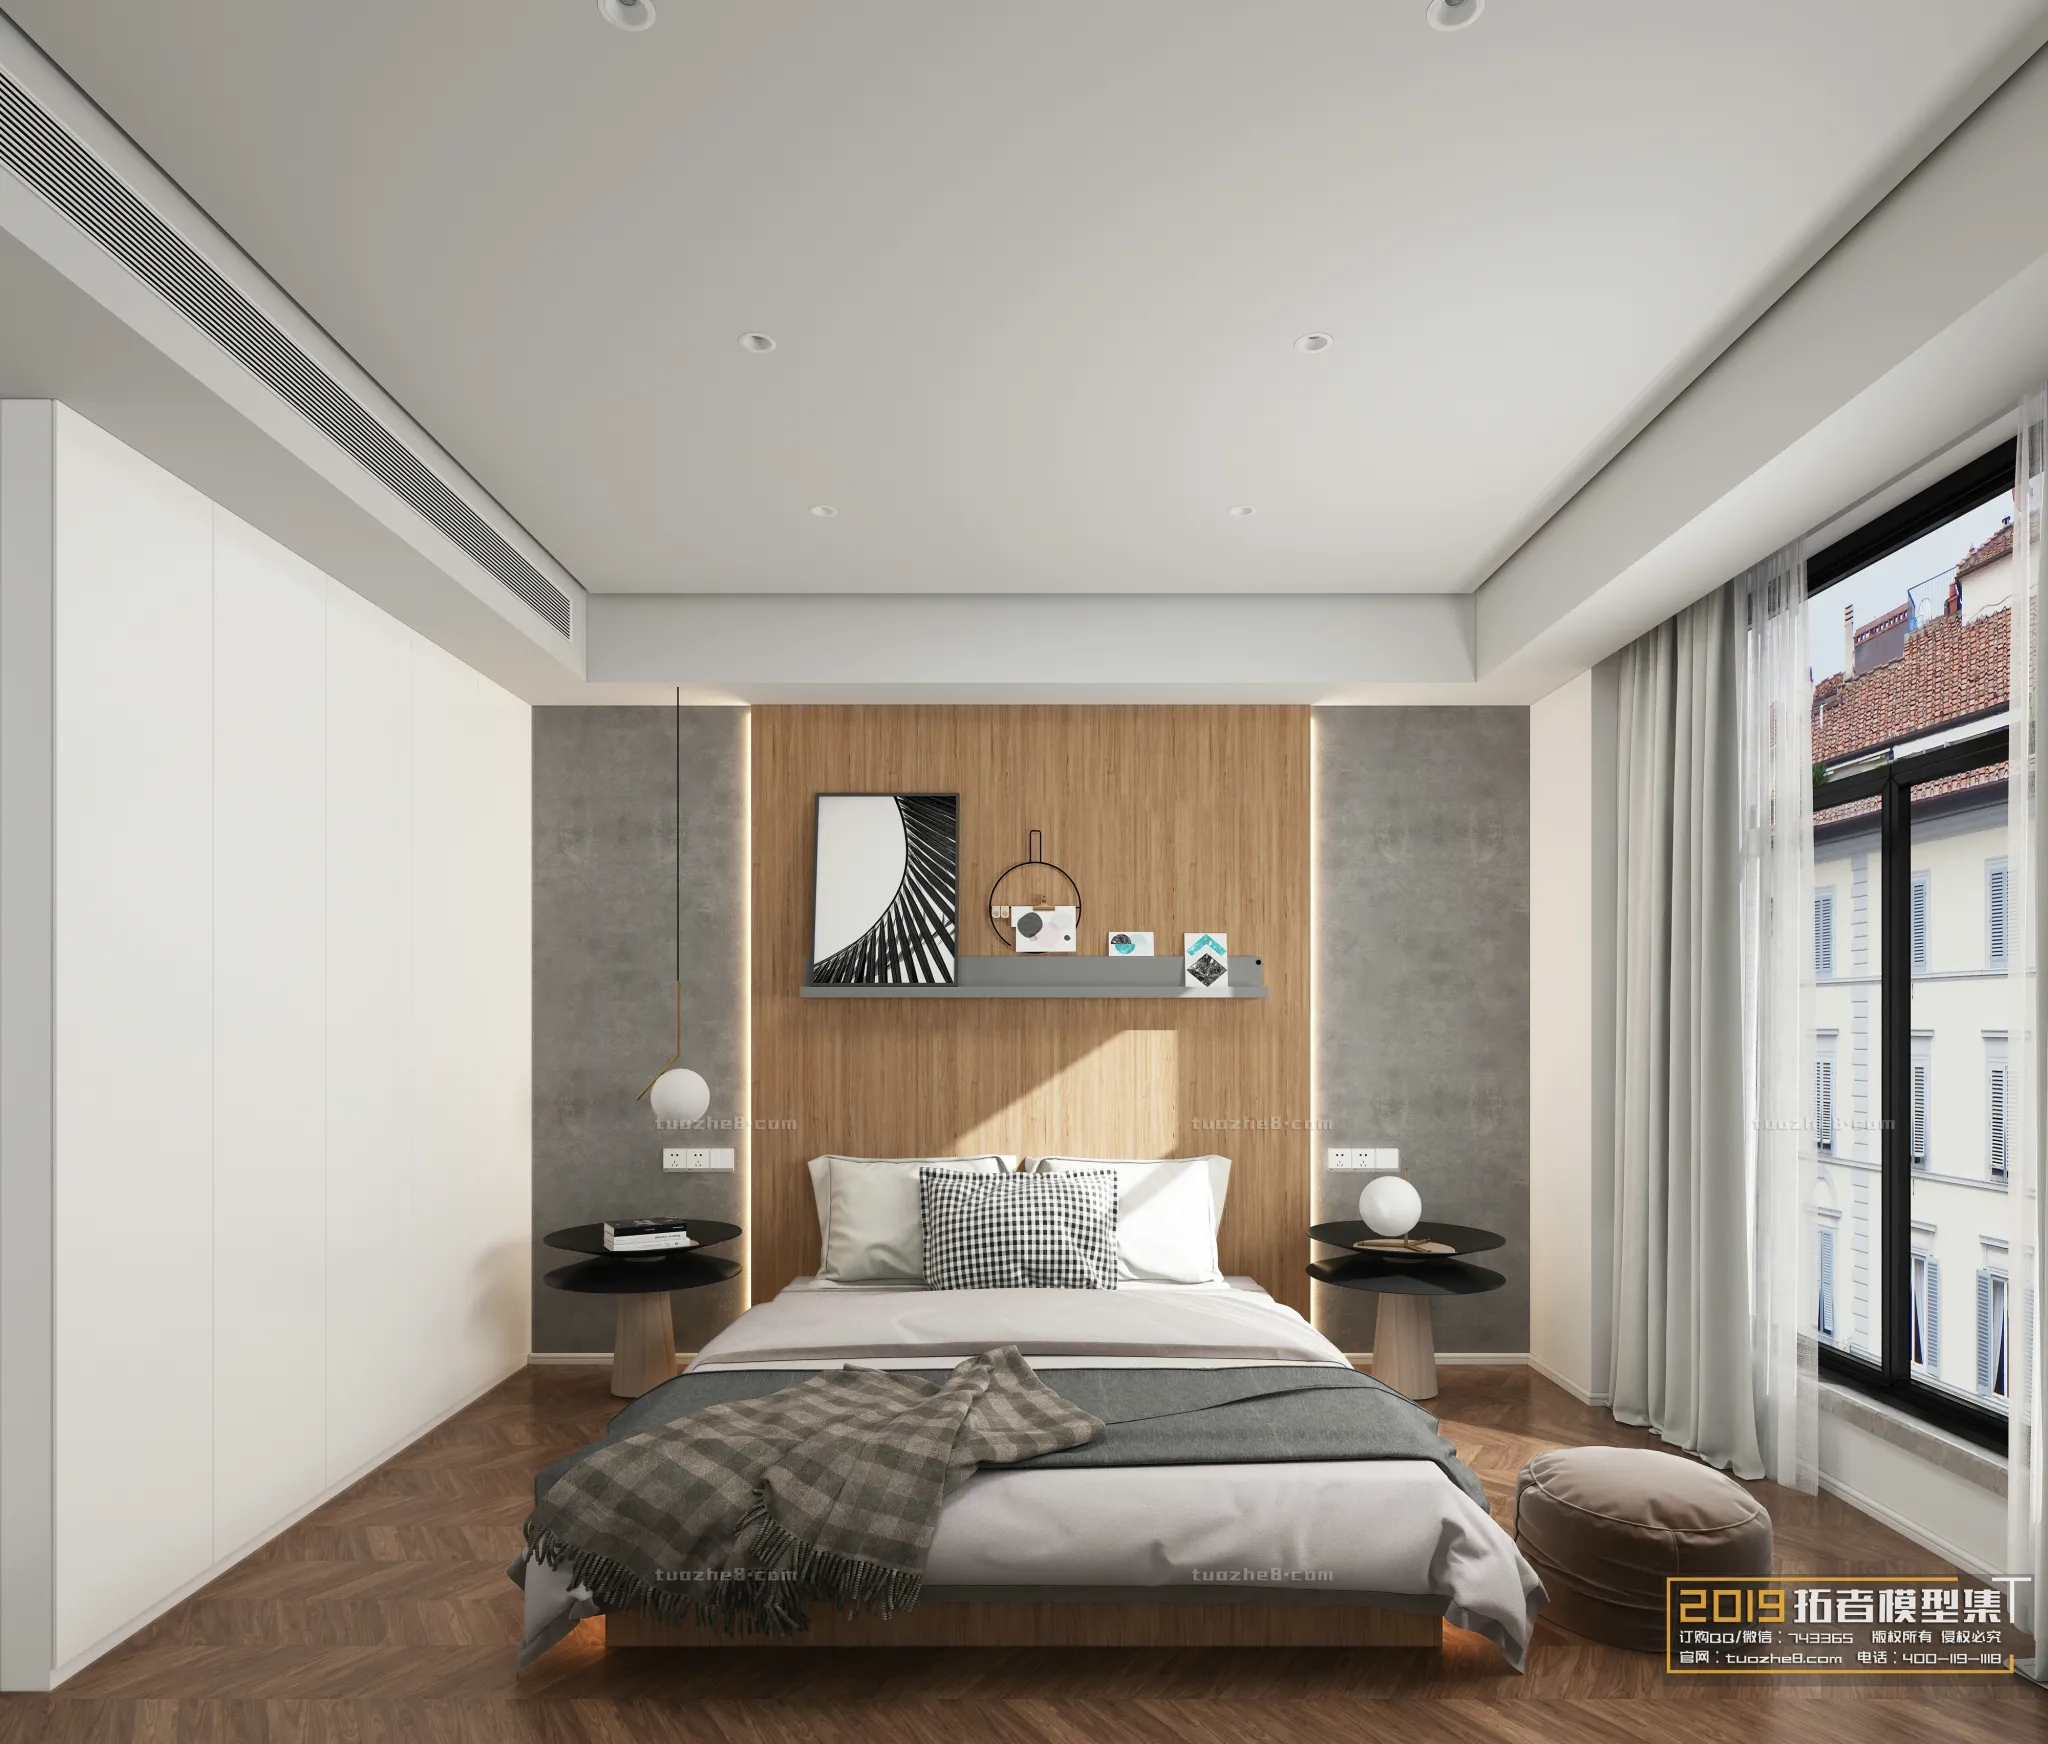 Extension Interior – BEDROOM – NORDIC STYLES – 013